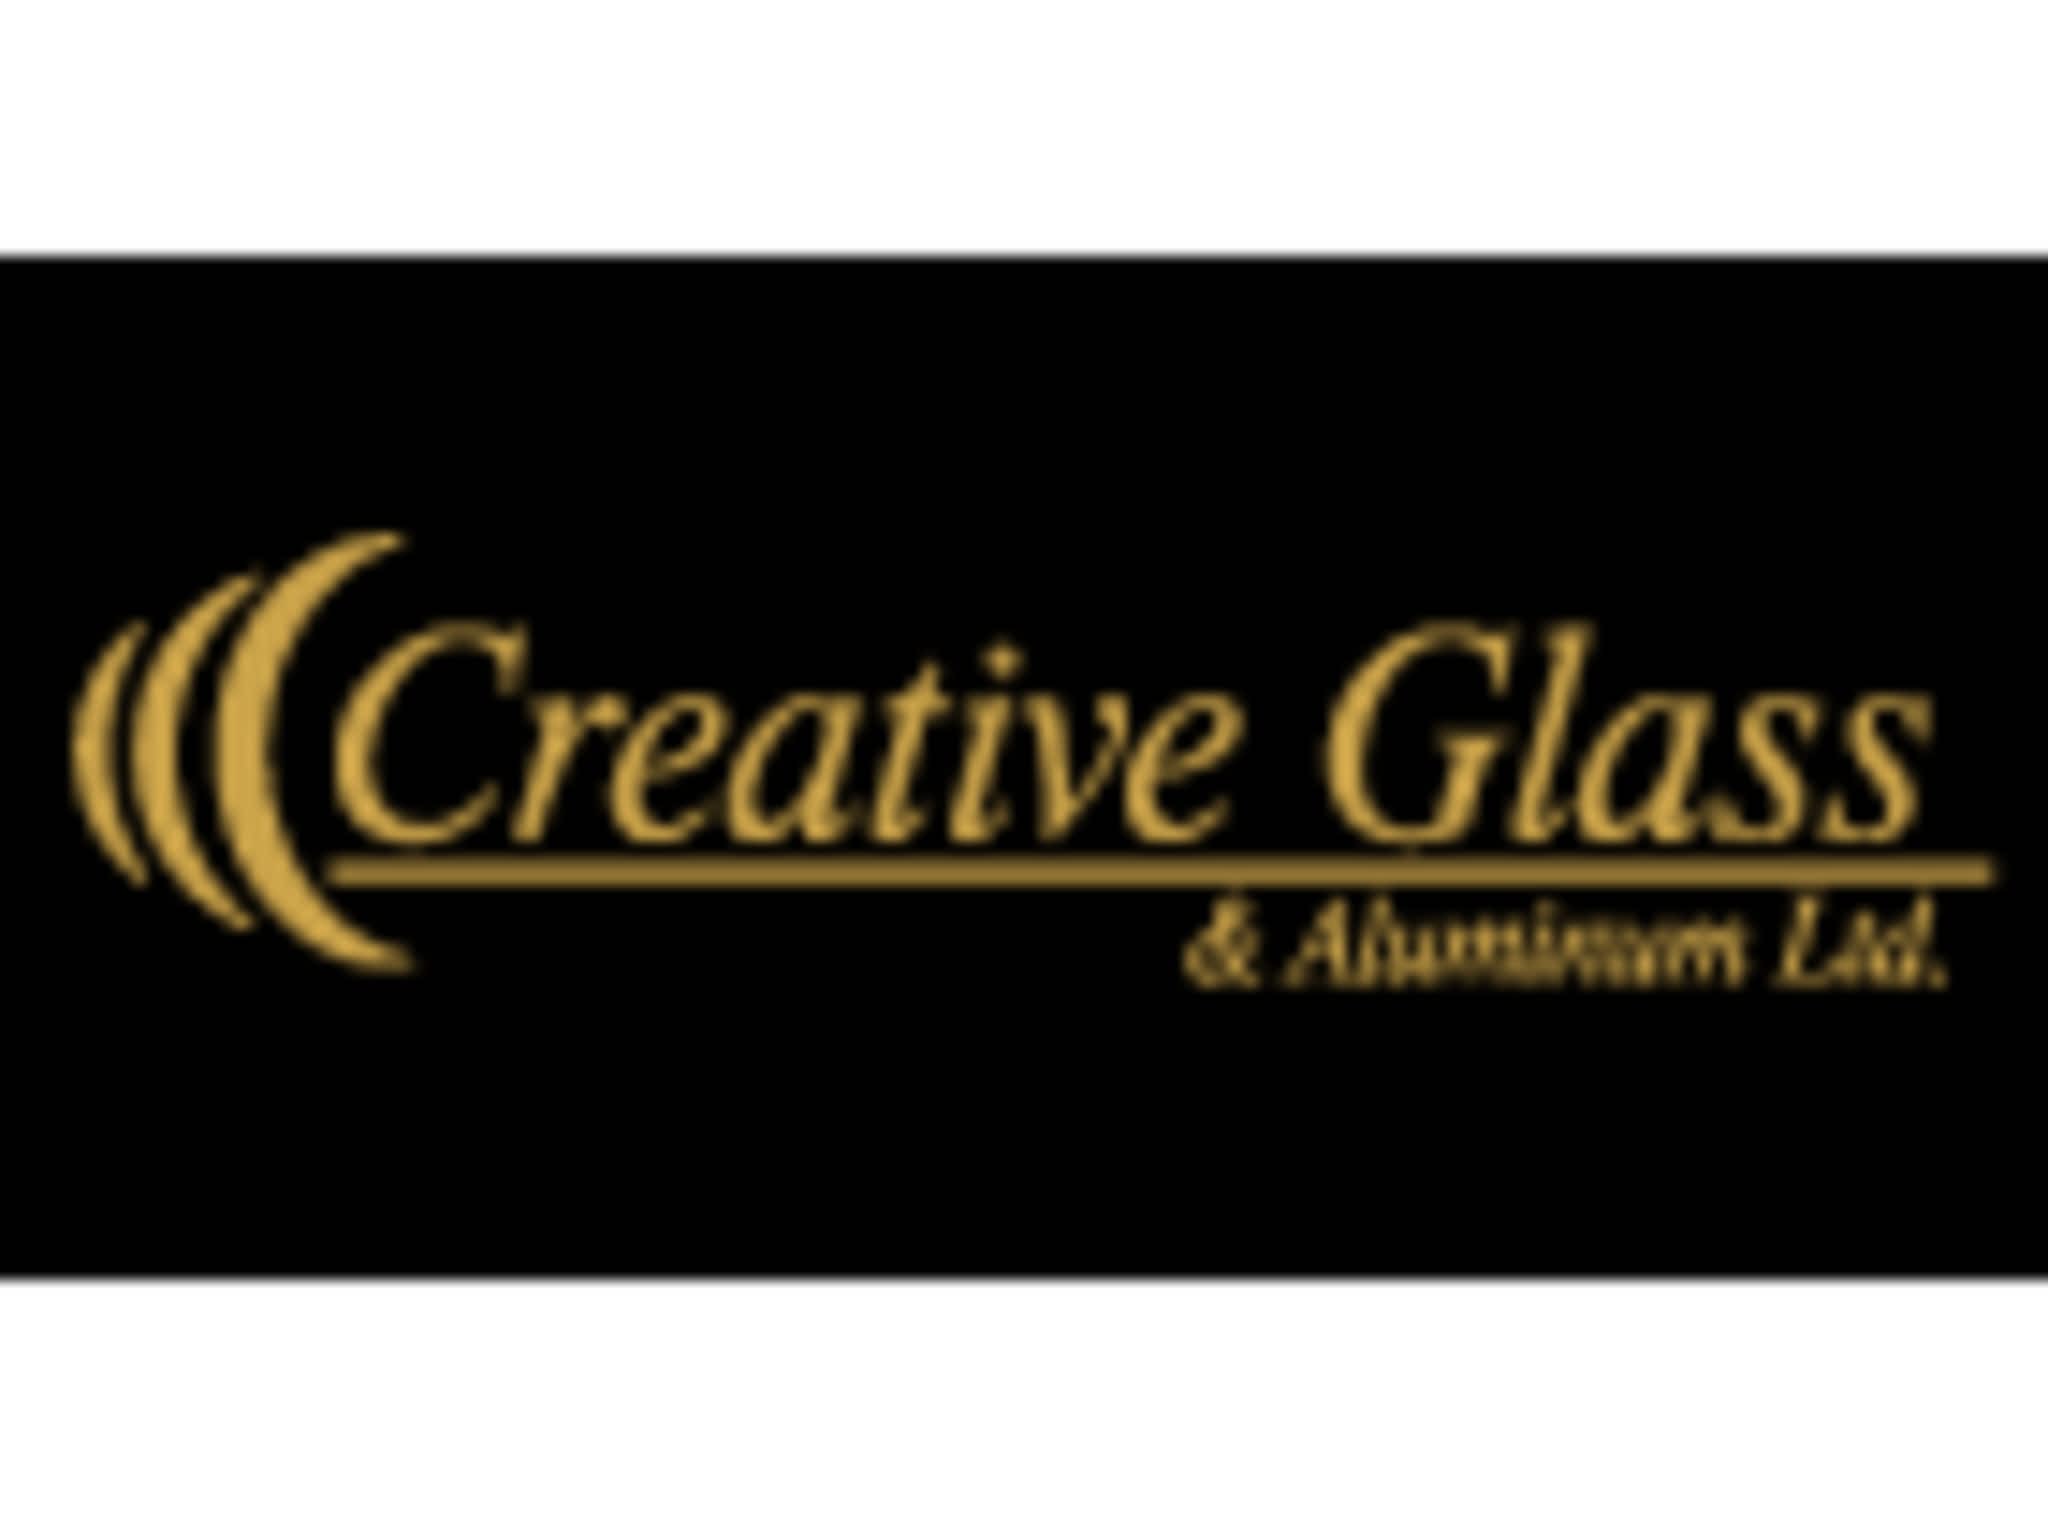 photo Creative Glass & Aluminum